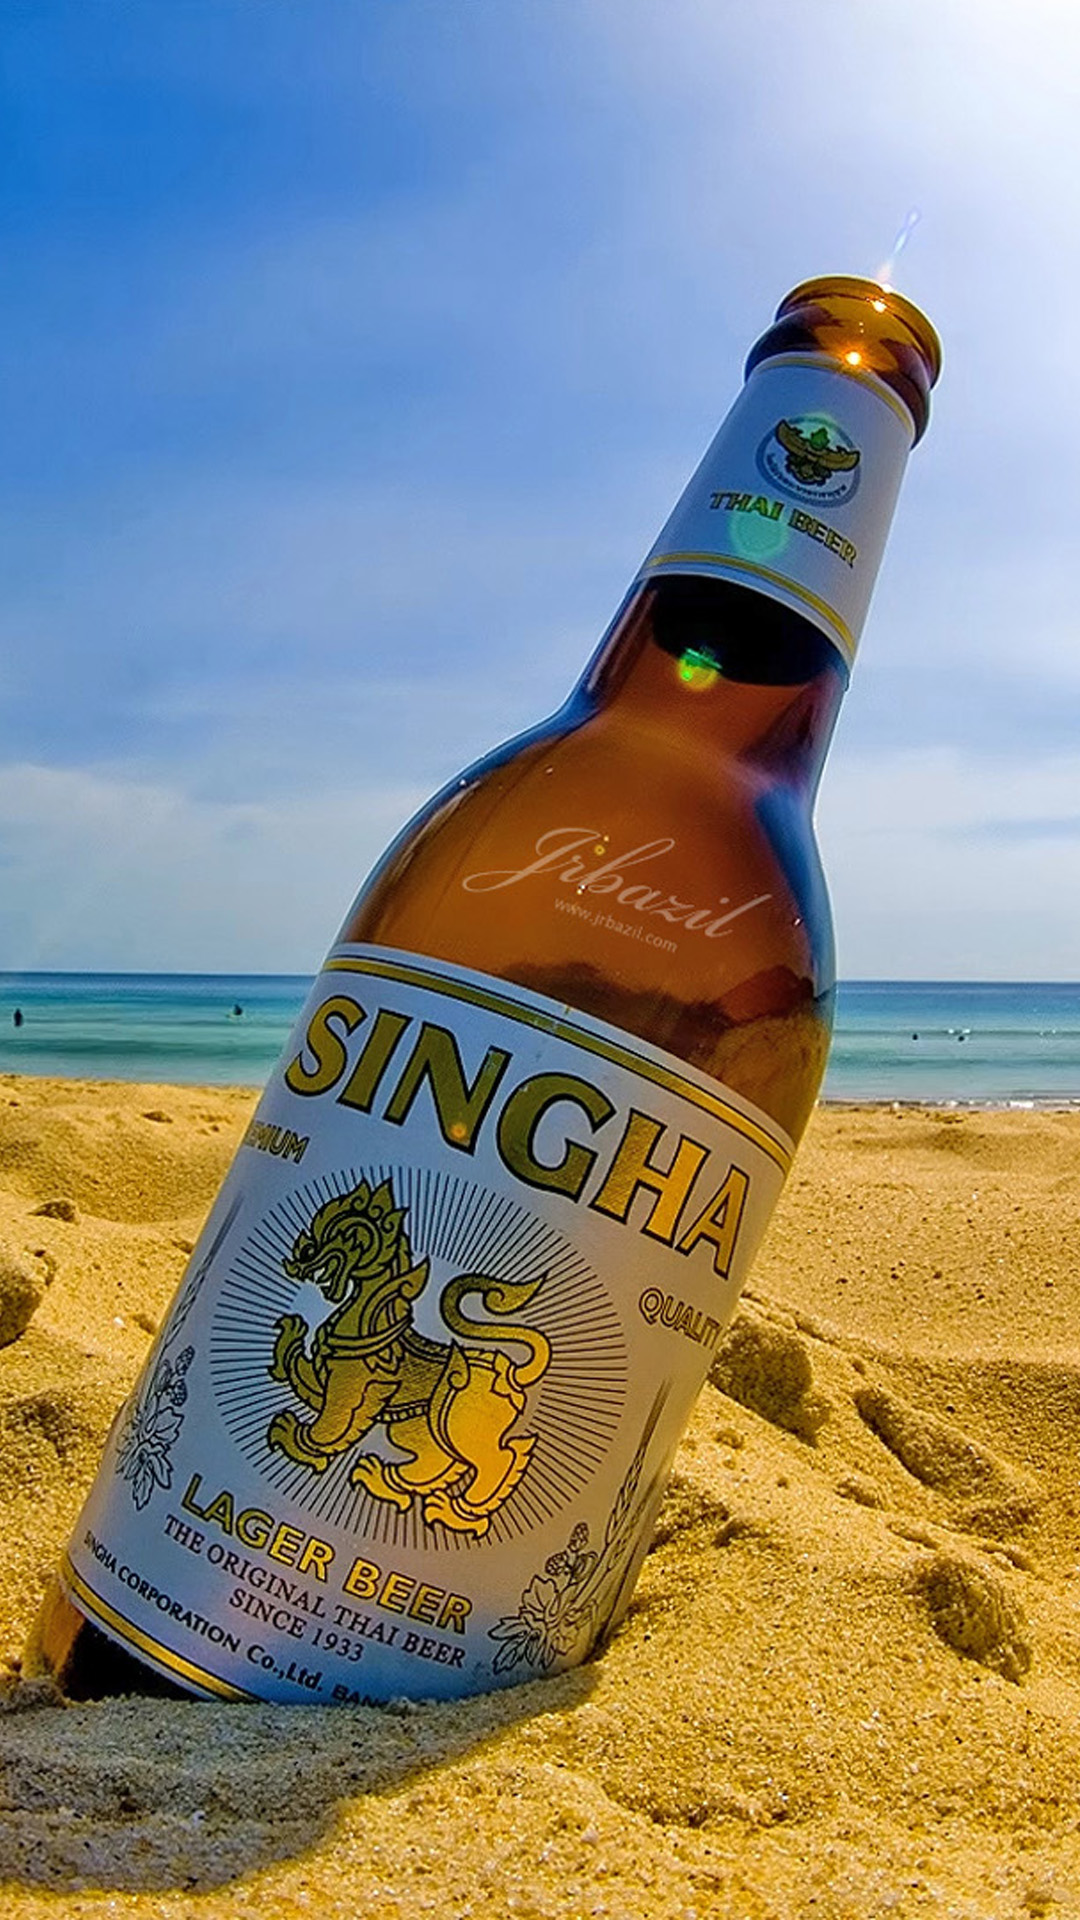 Summer beach beer bottle